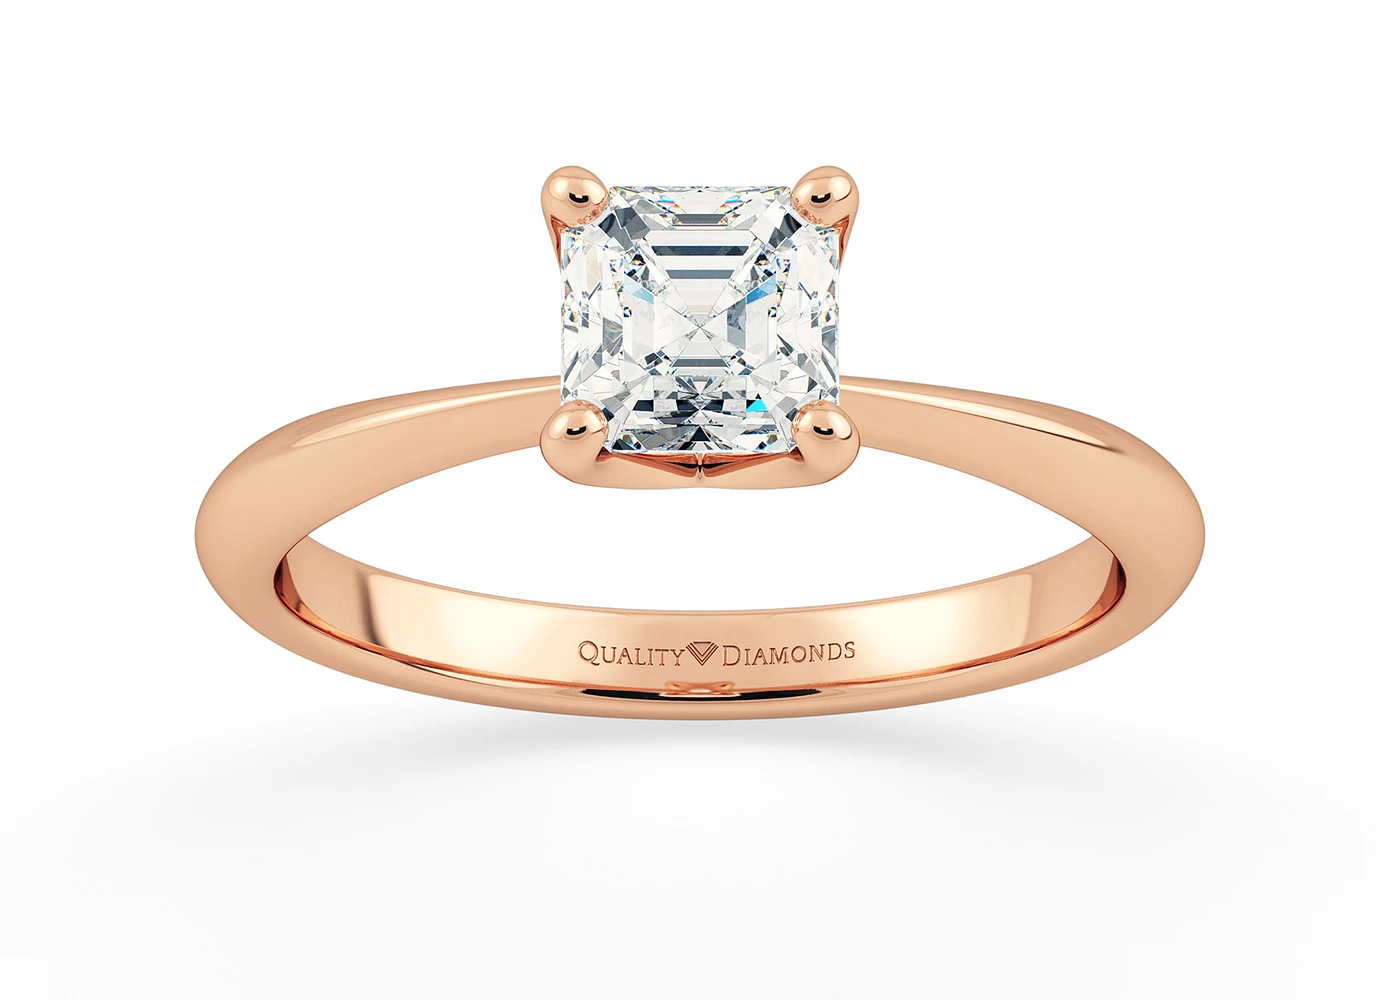 Amorette Asscher Diamond Ring in 18K Rose Gold